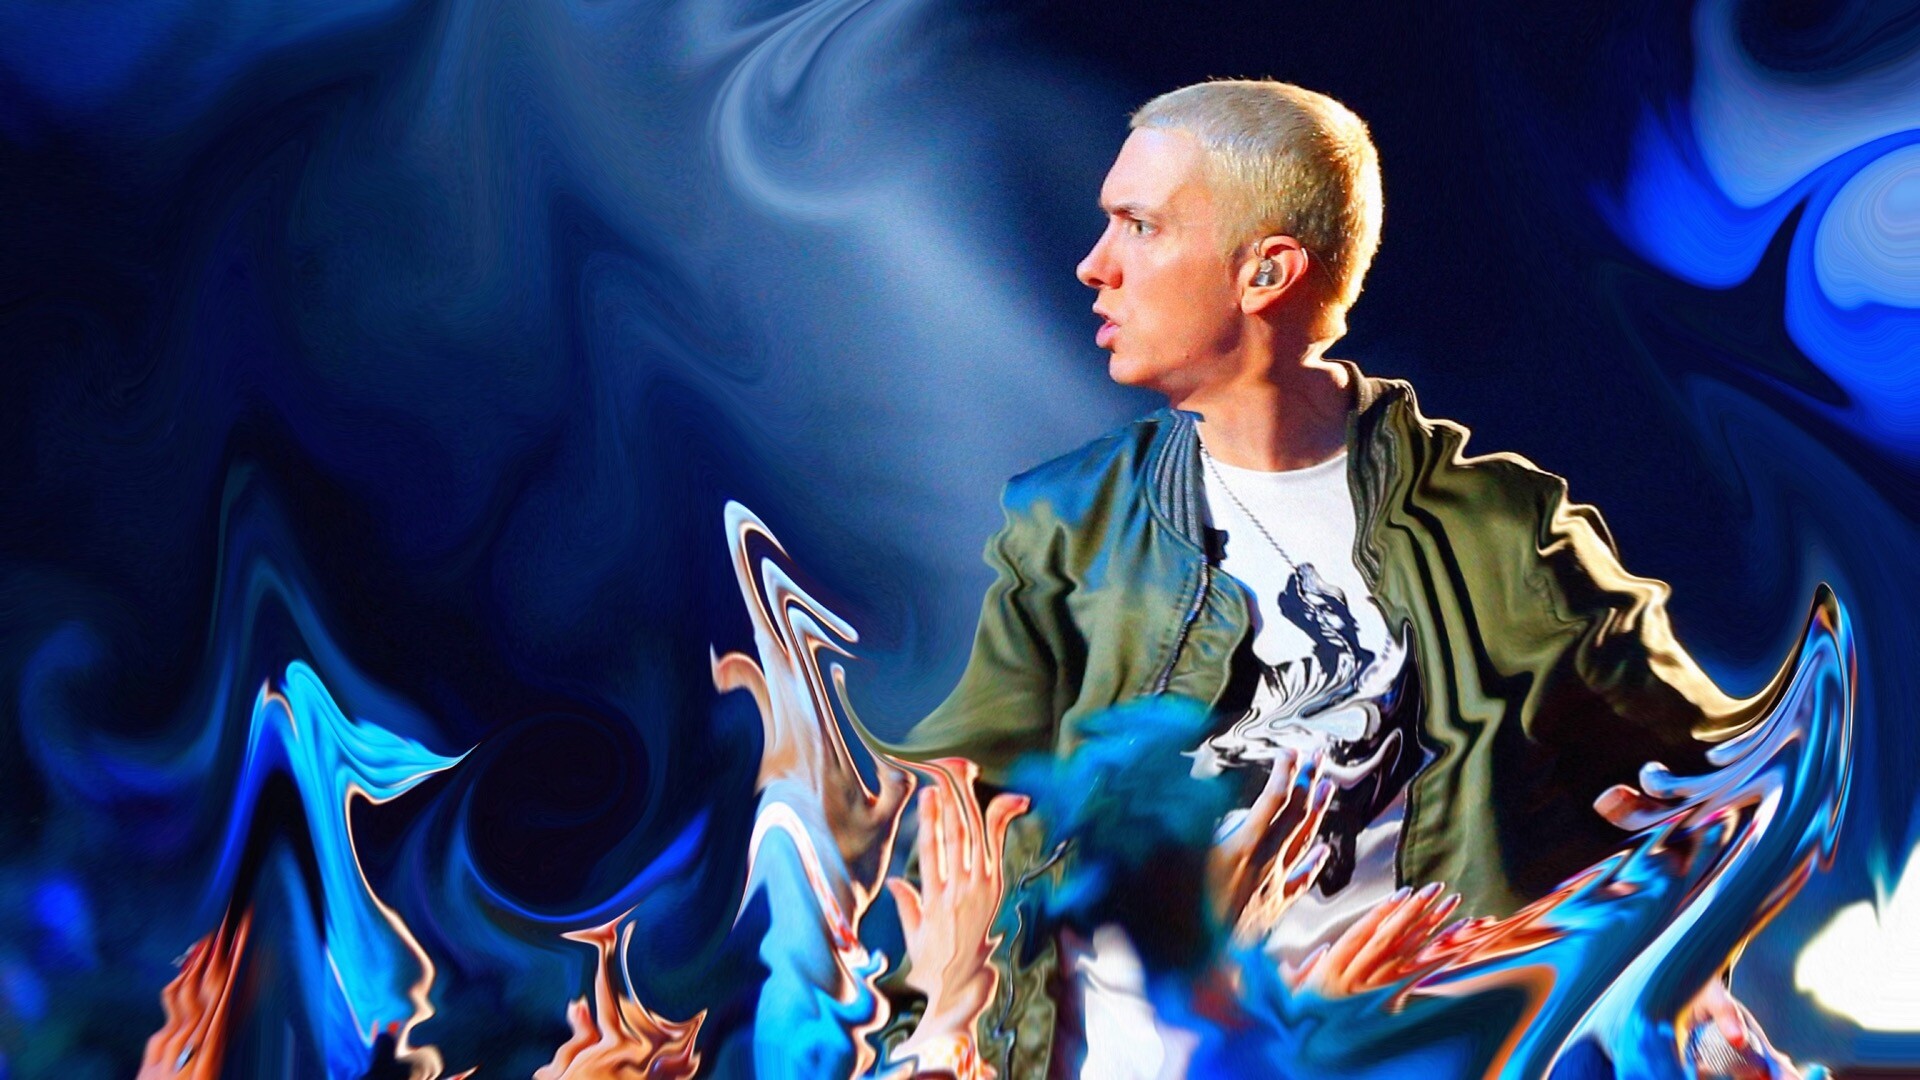 Eminem at the MTVs埃米纳姆主题Mac壁纸